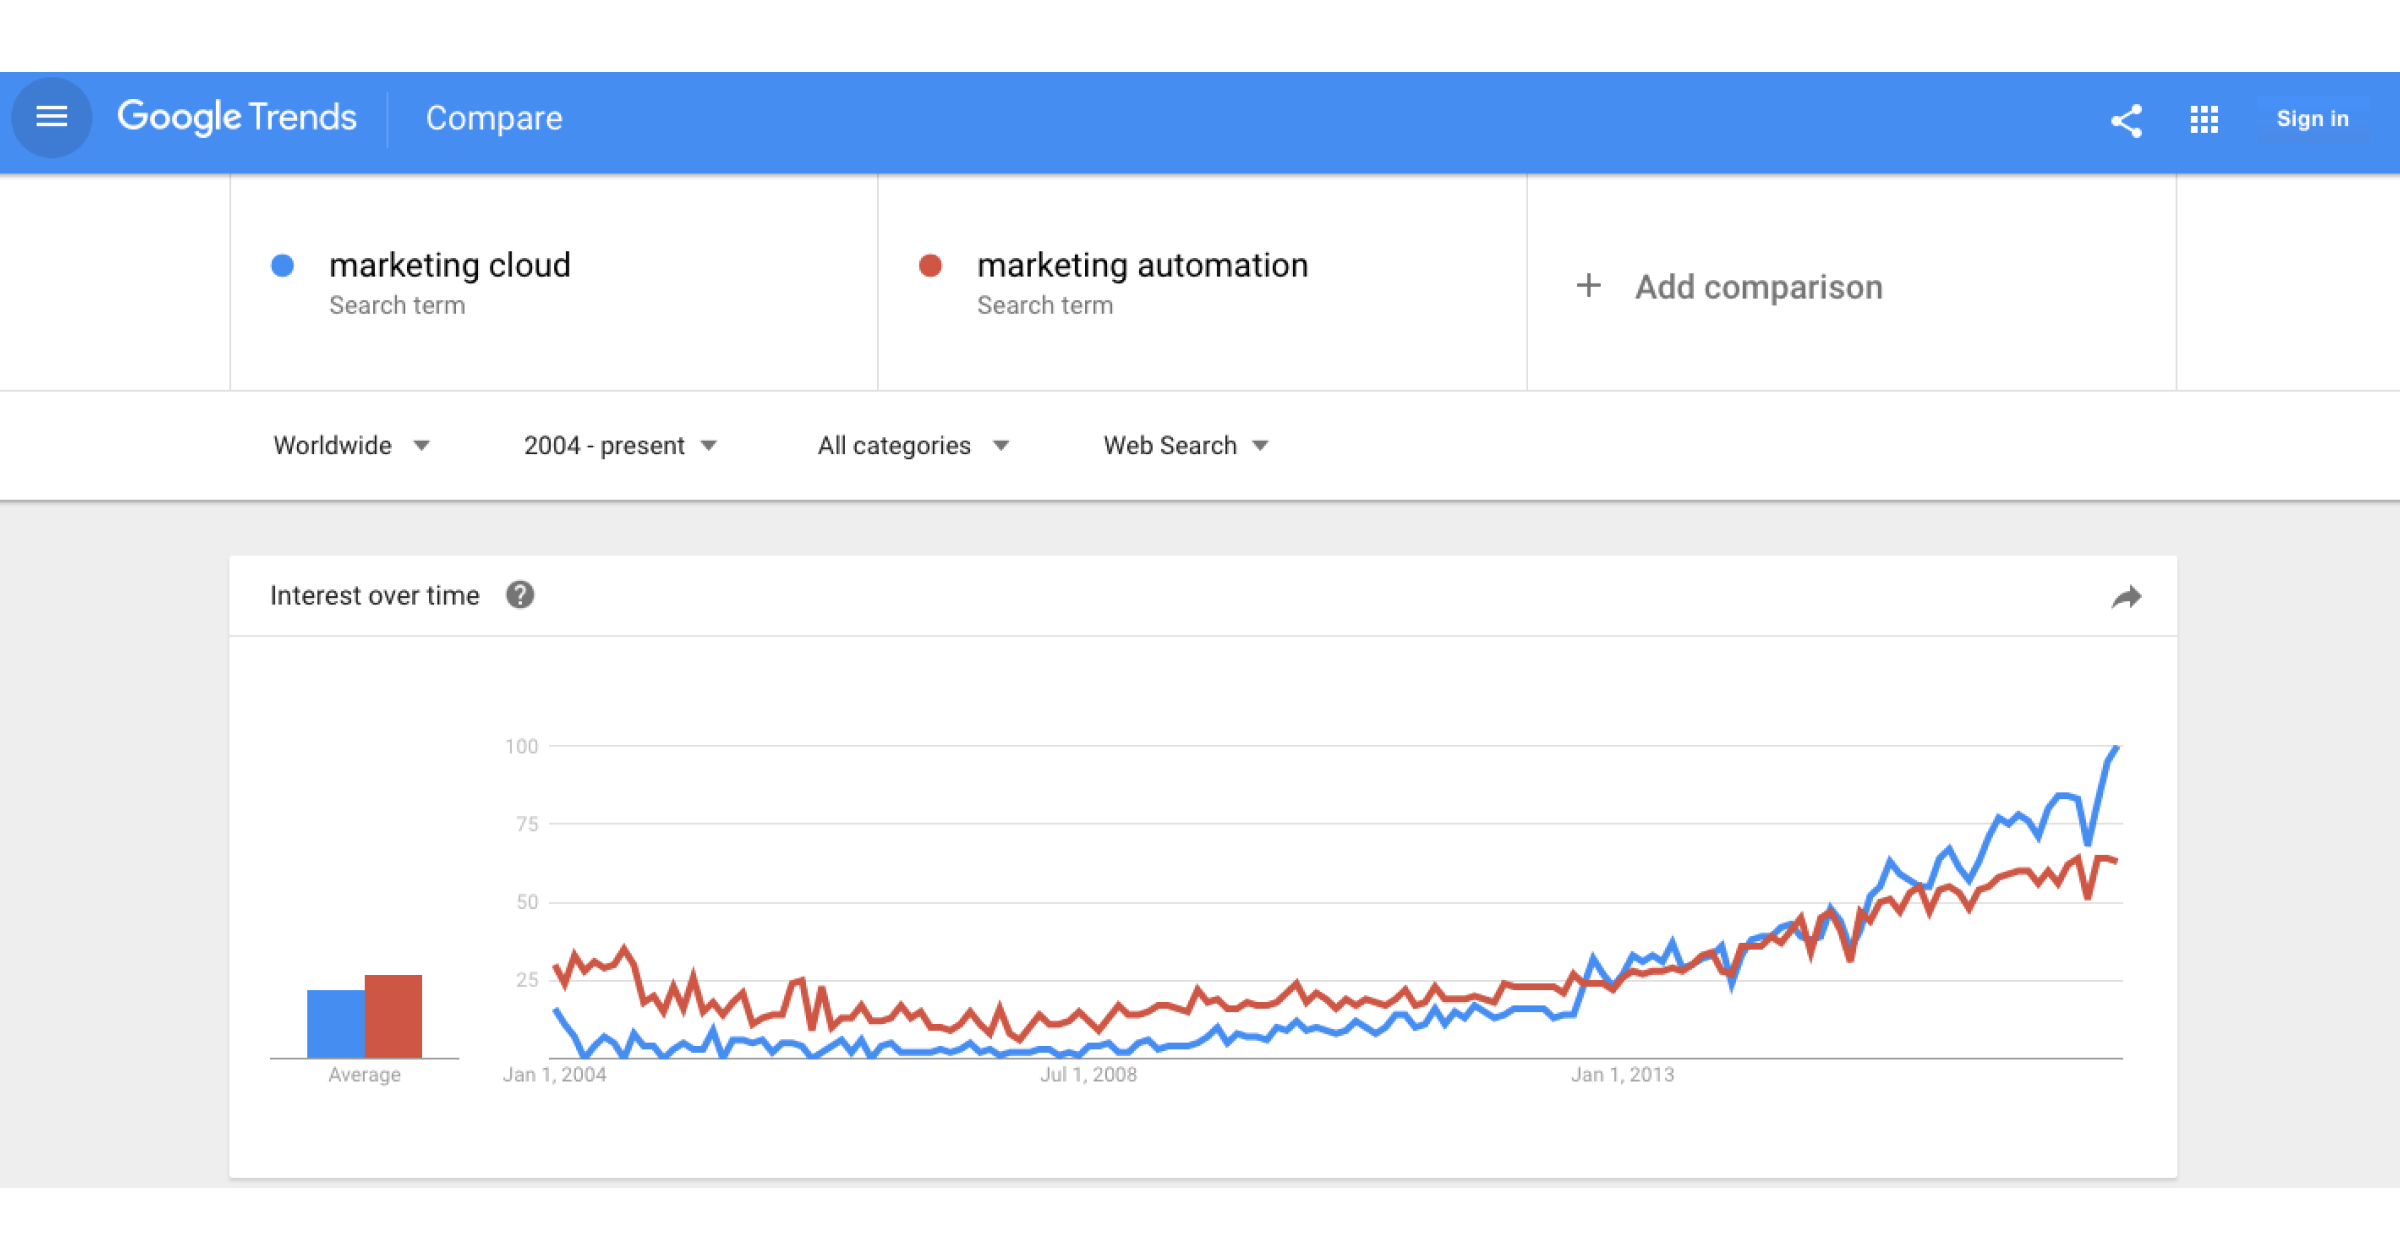 marketing cloud vs marketing automation level of interest - Google trends